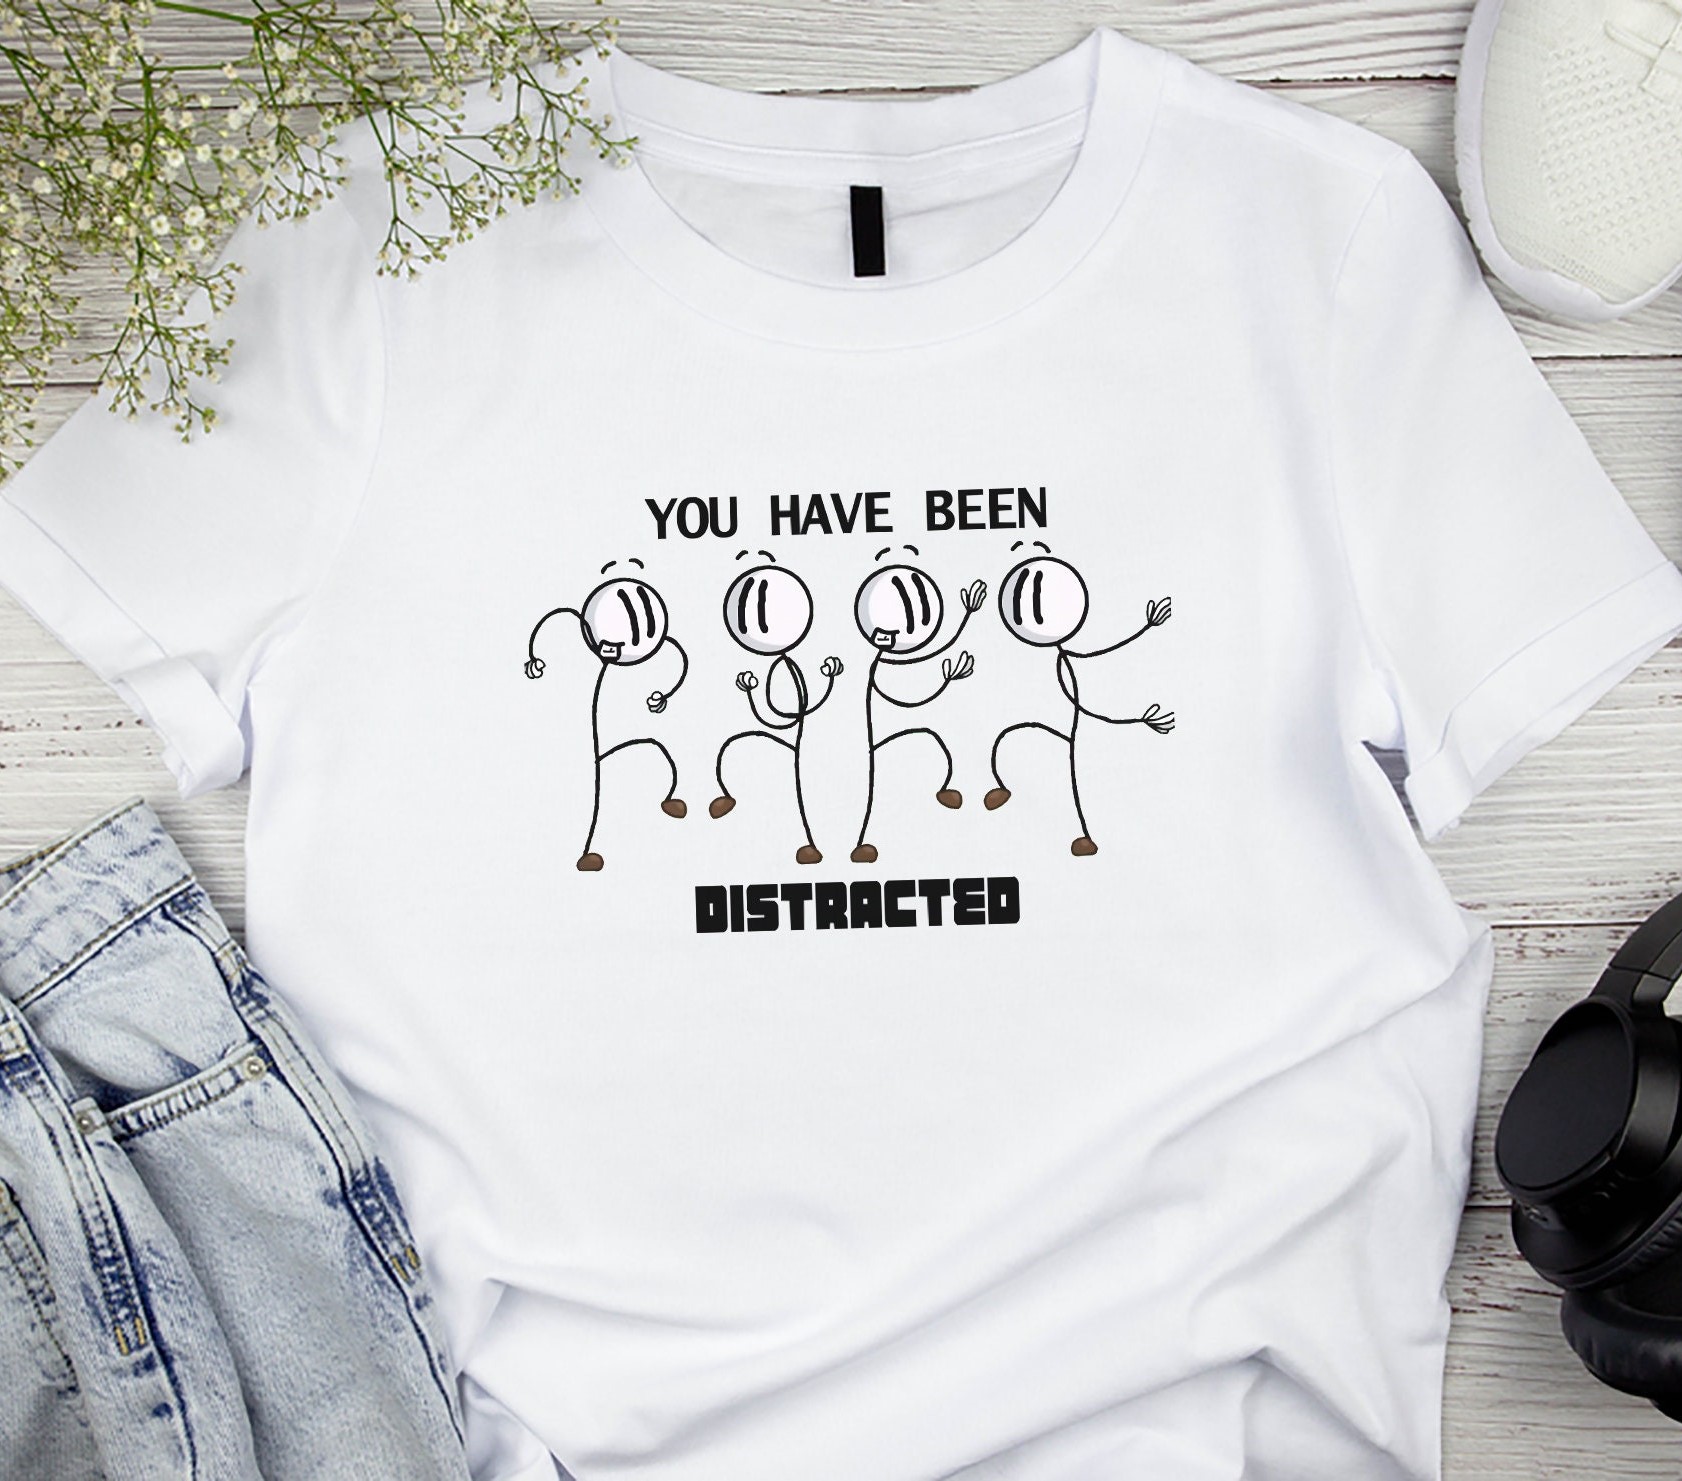 Stickman meme funny | Kids T-Shirt